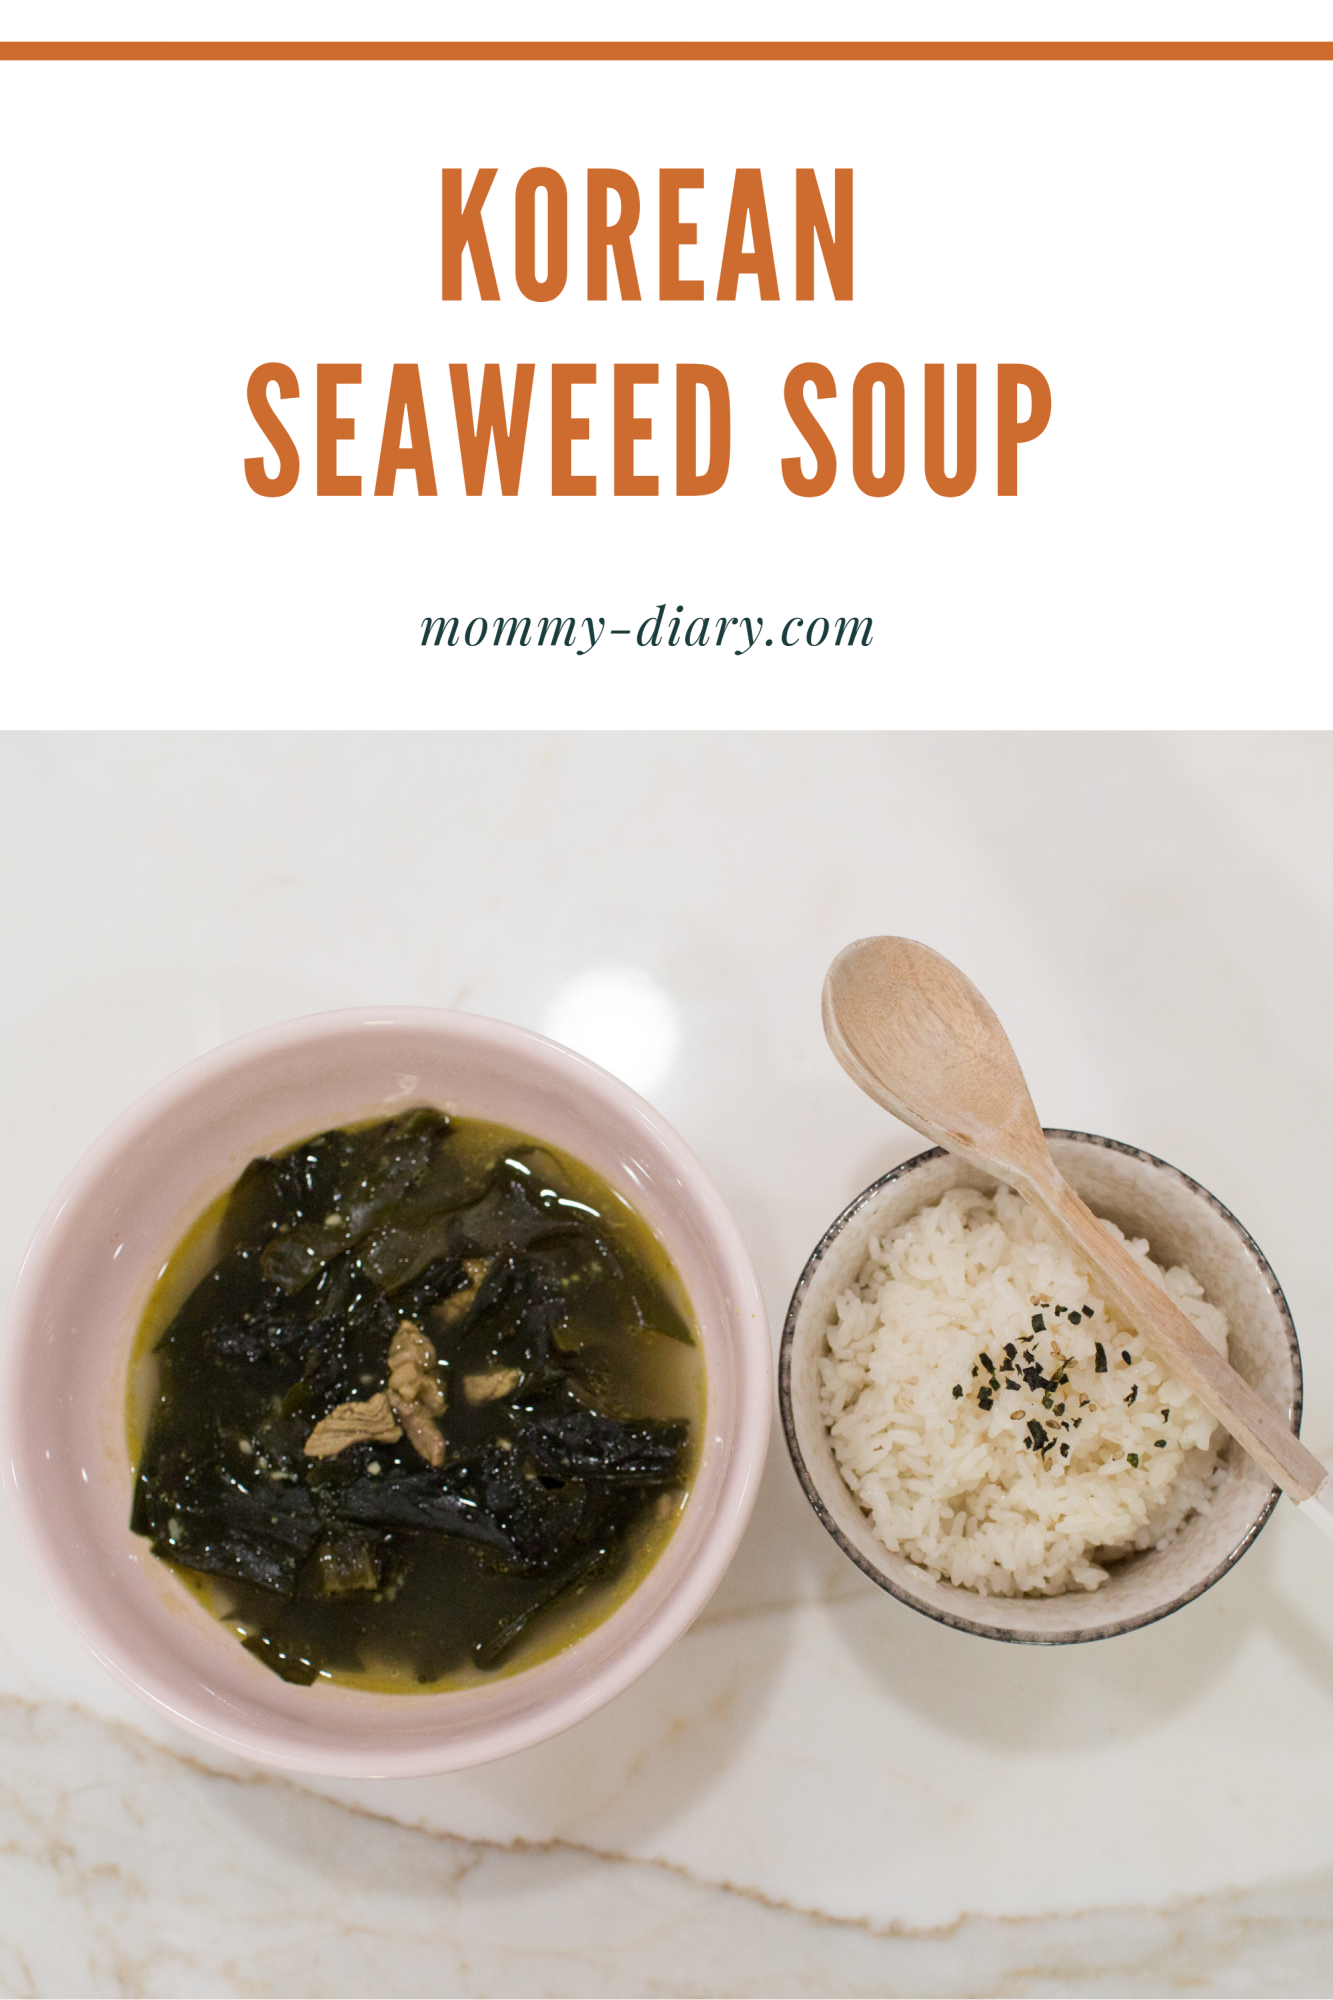 Korean Seaweed Soup For Postpartum Mothers